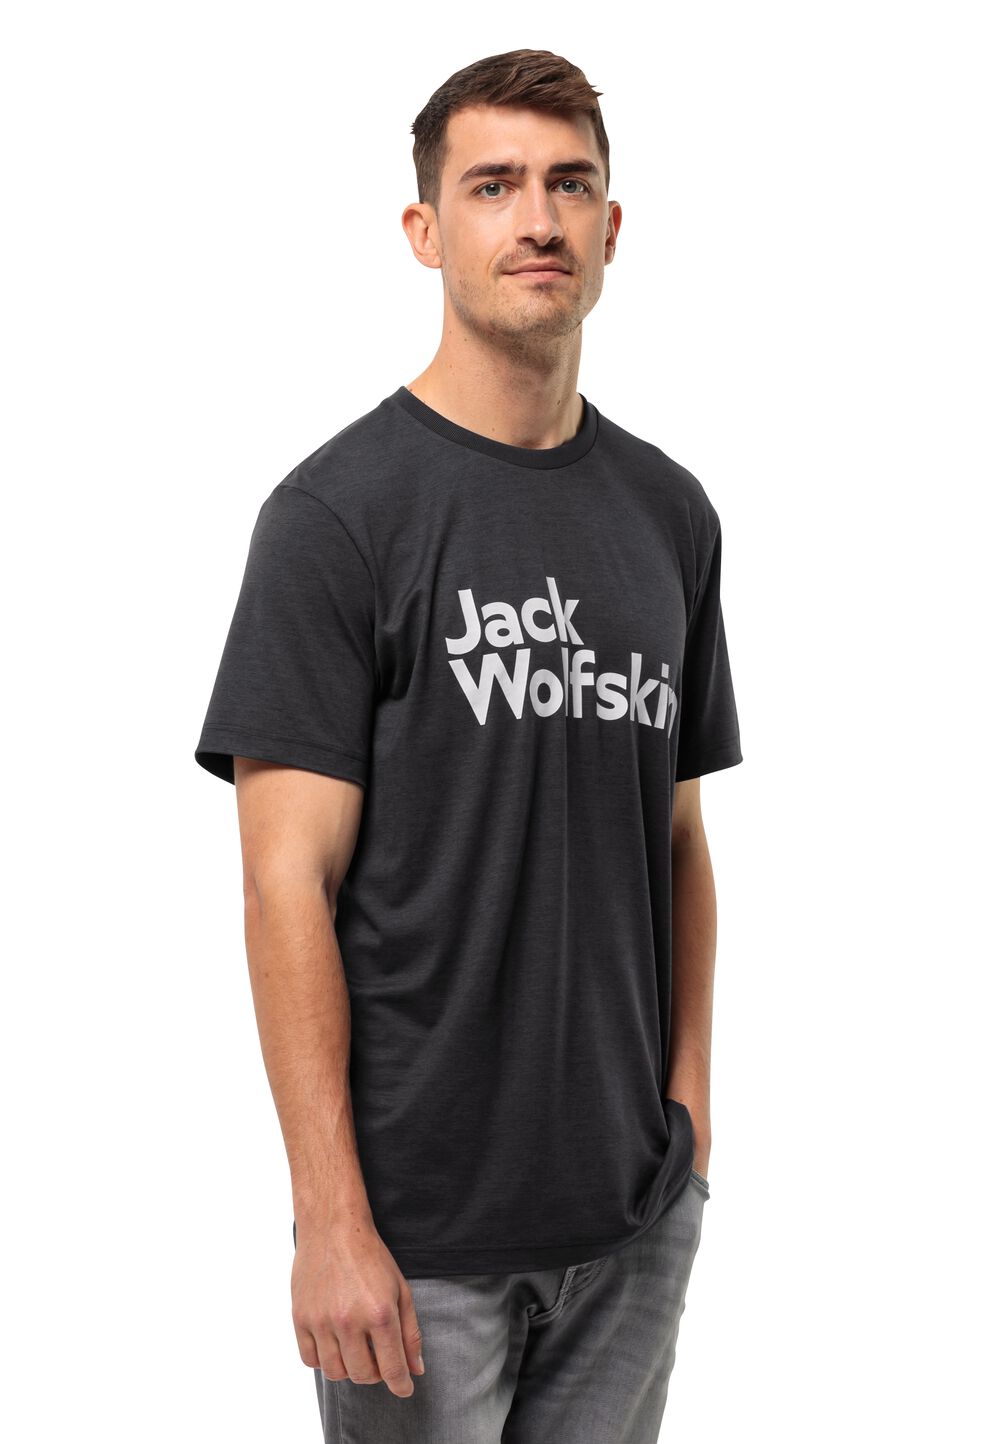 Jack Wolfskin Brand T-Shirt Men Functioneel shirt Heren L zwart black